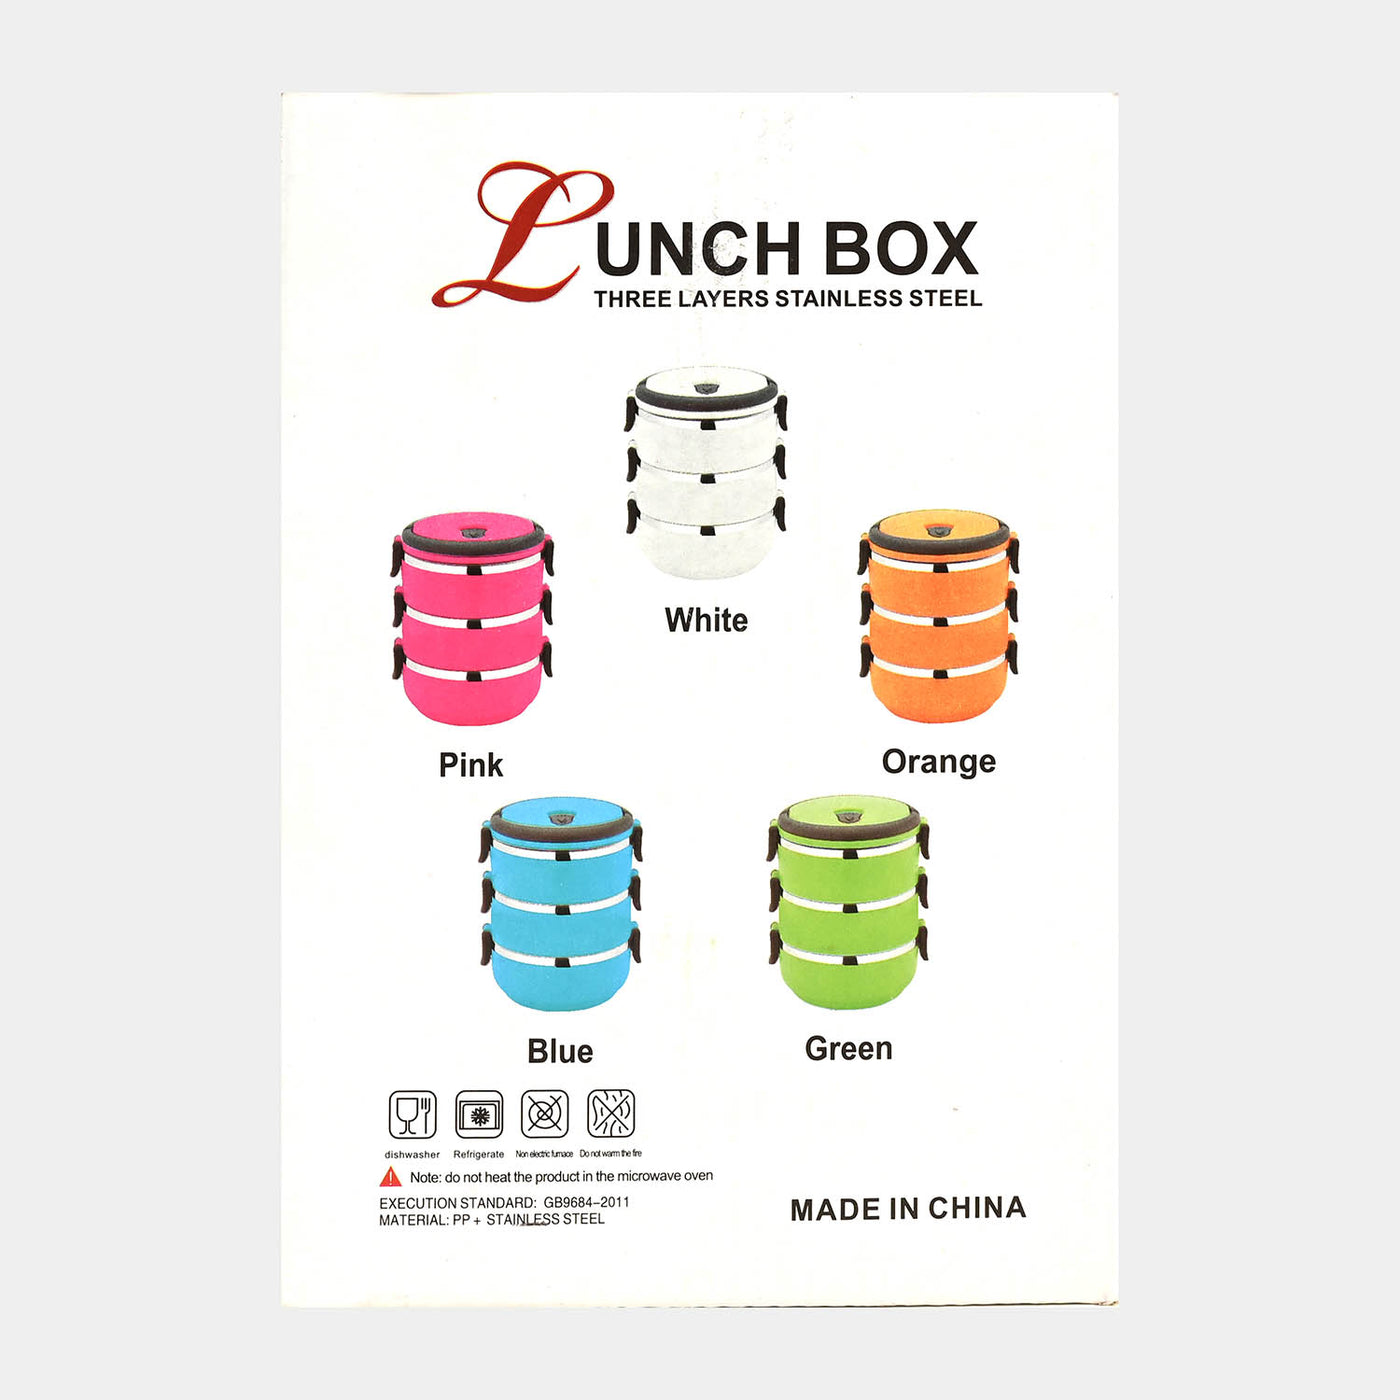 Lunch Box Round 3 Layer